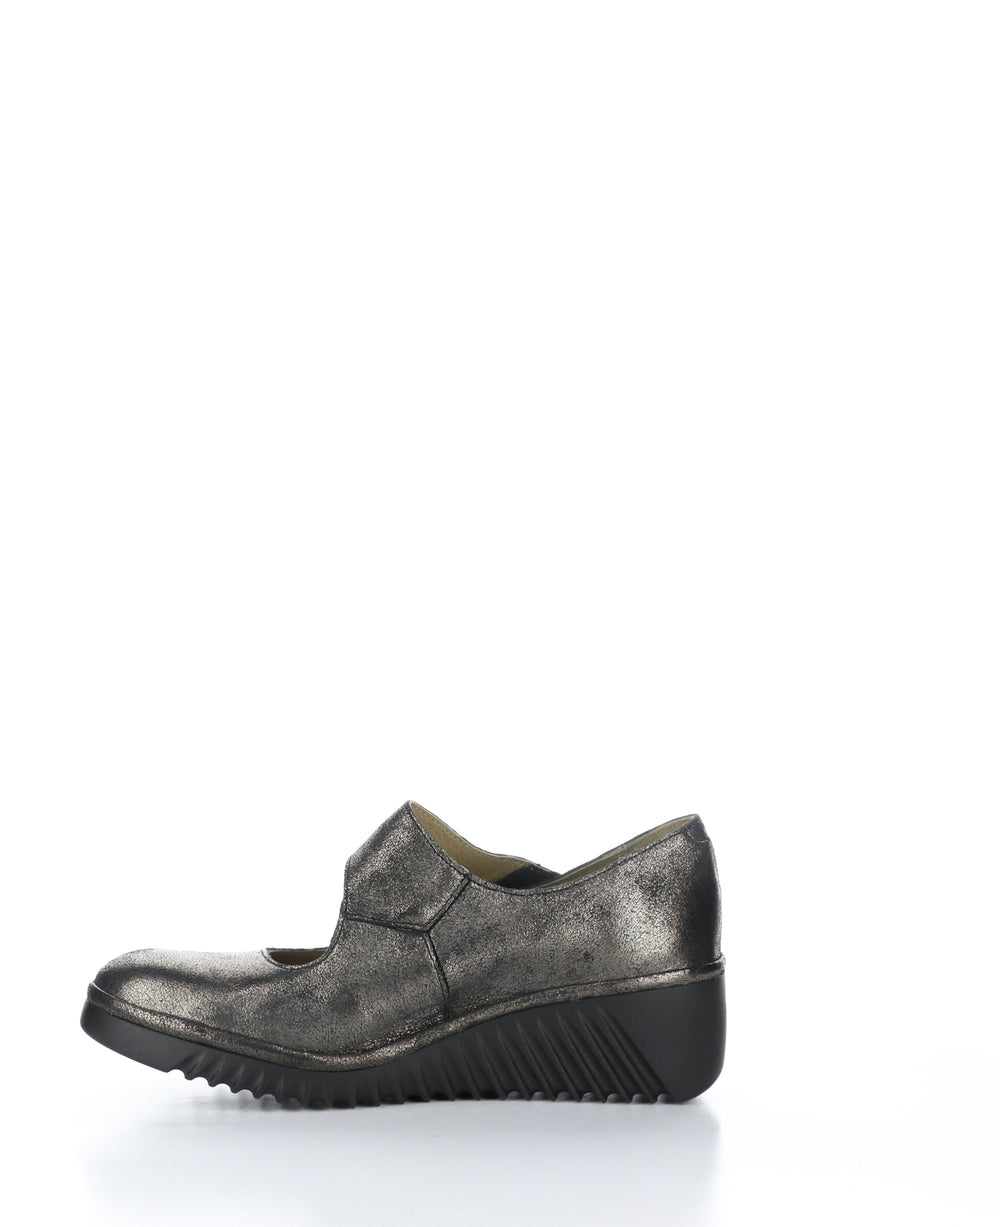 LYKA350FLY Graphite Round Toe Shoes